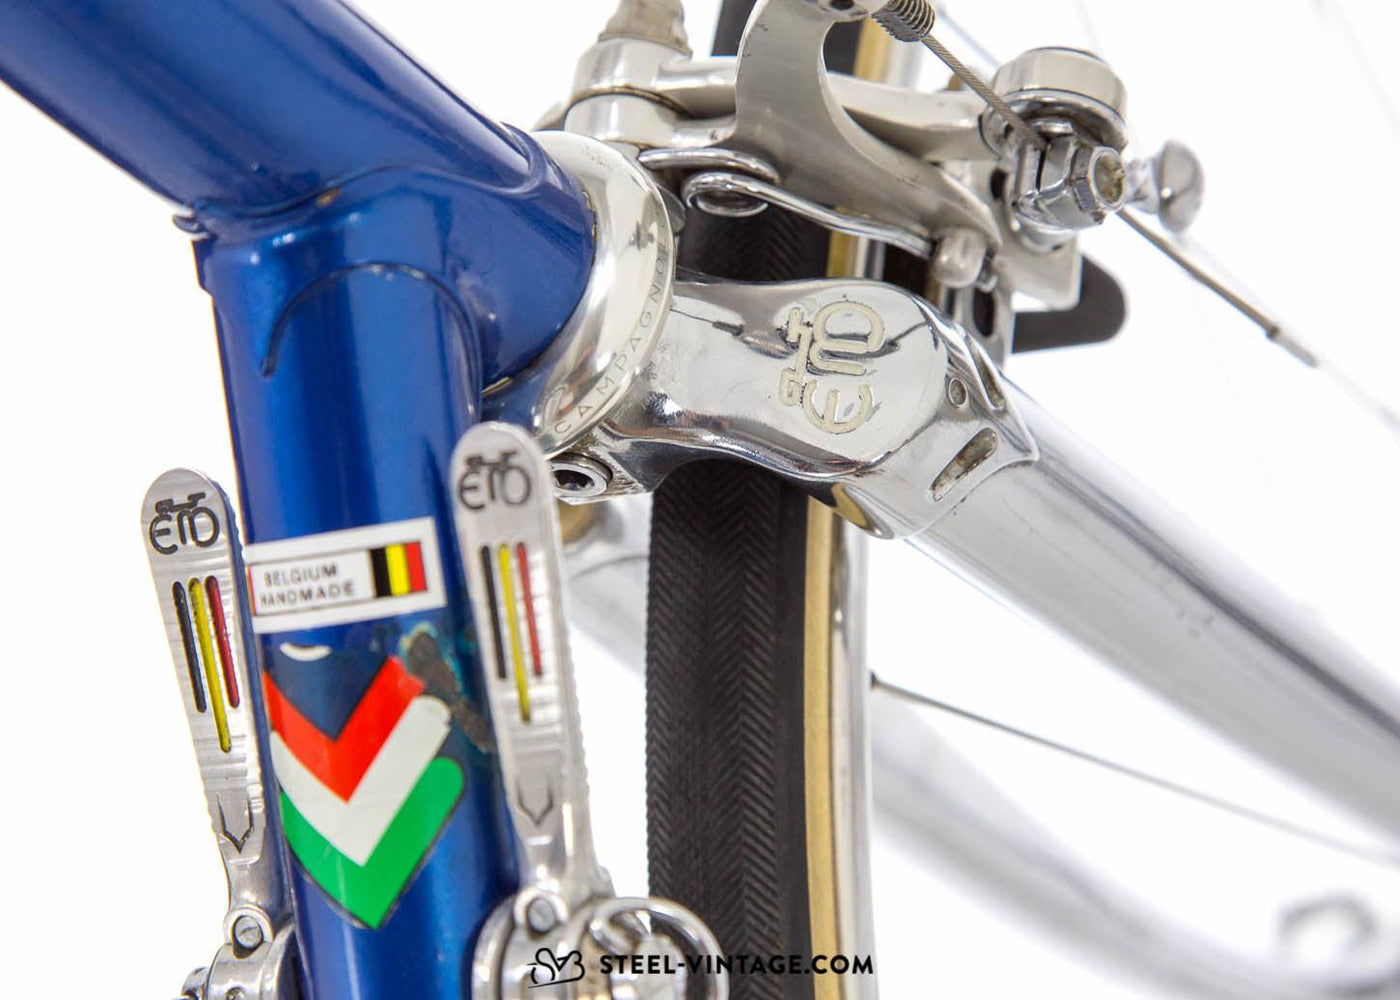 Eddy Merckx Professional SLX Eroica Bicycle - Steel Vintage Bikes